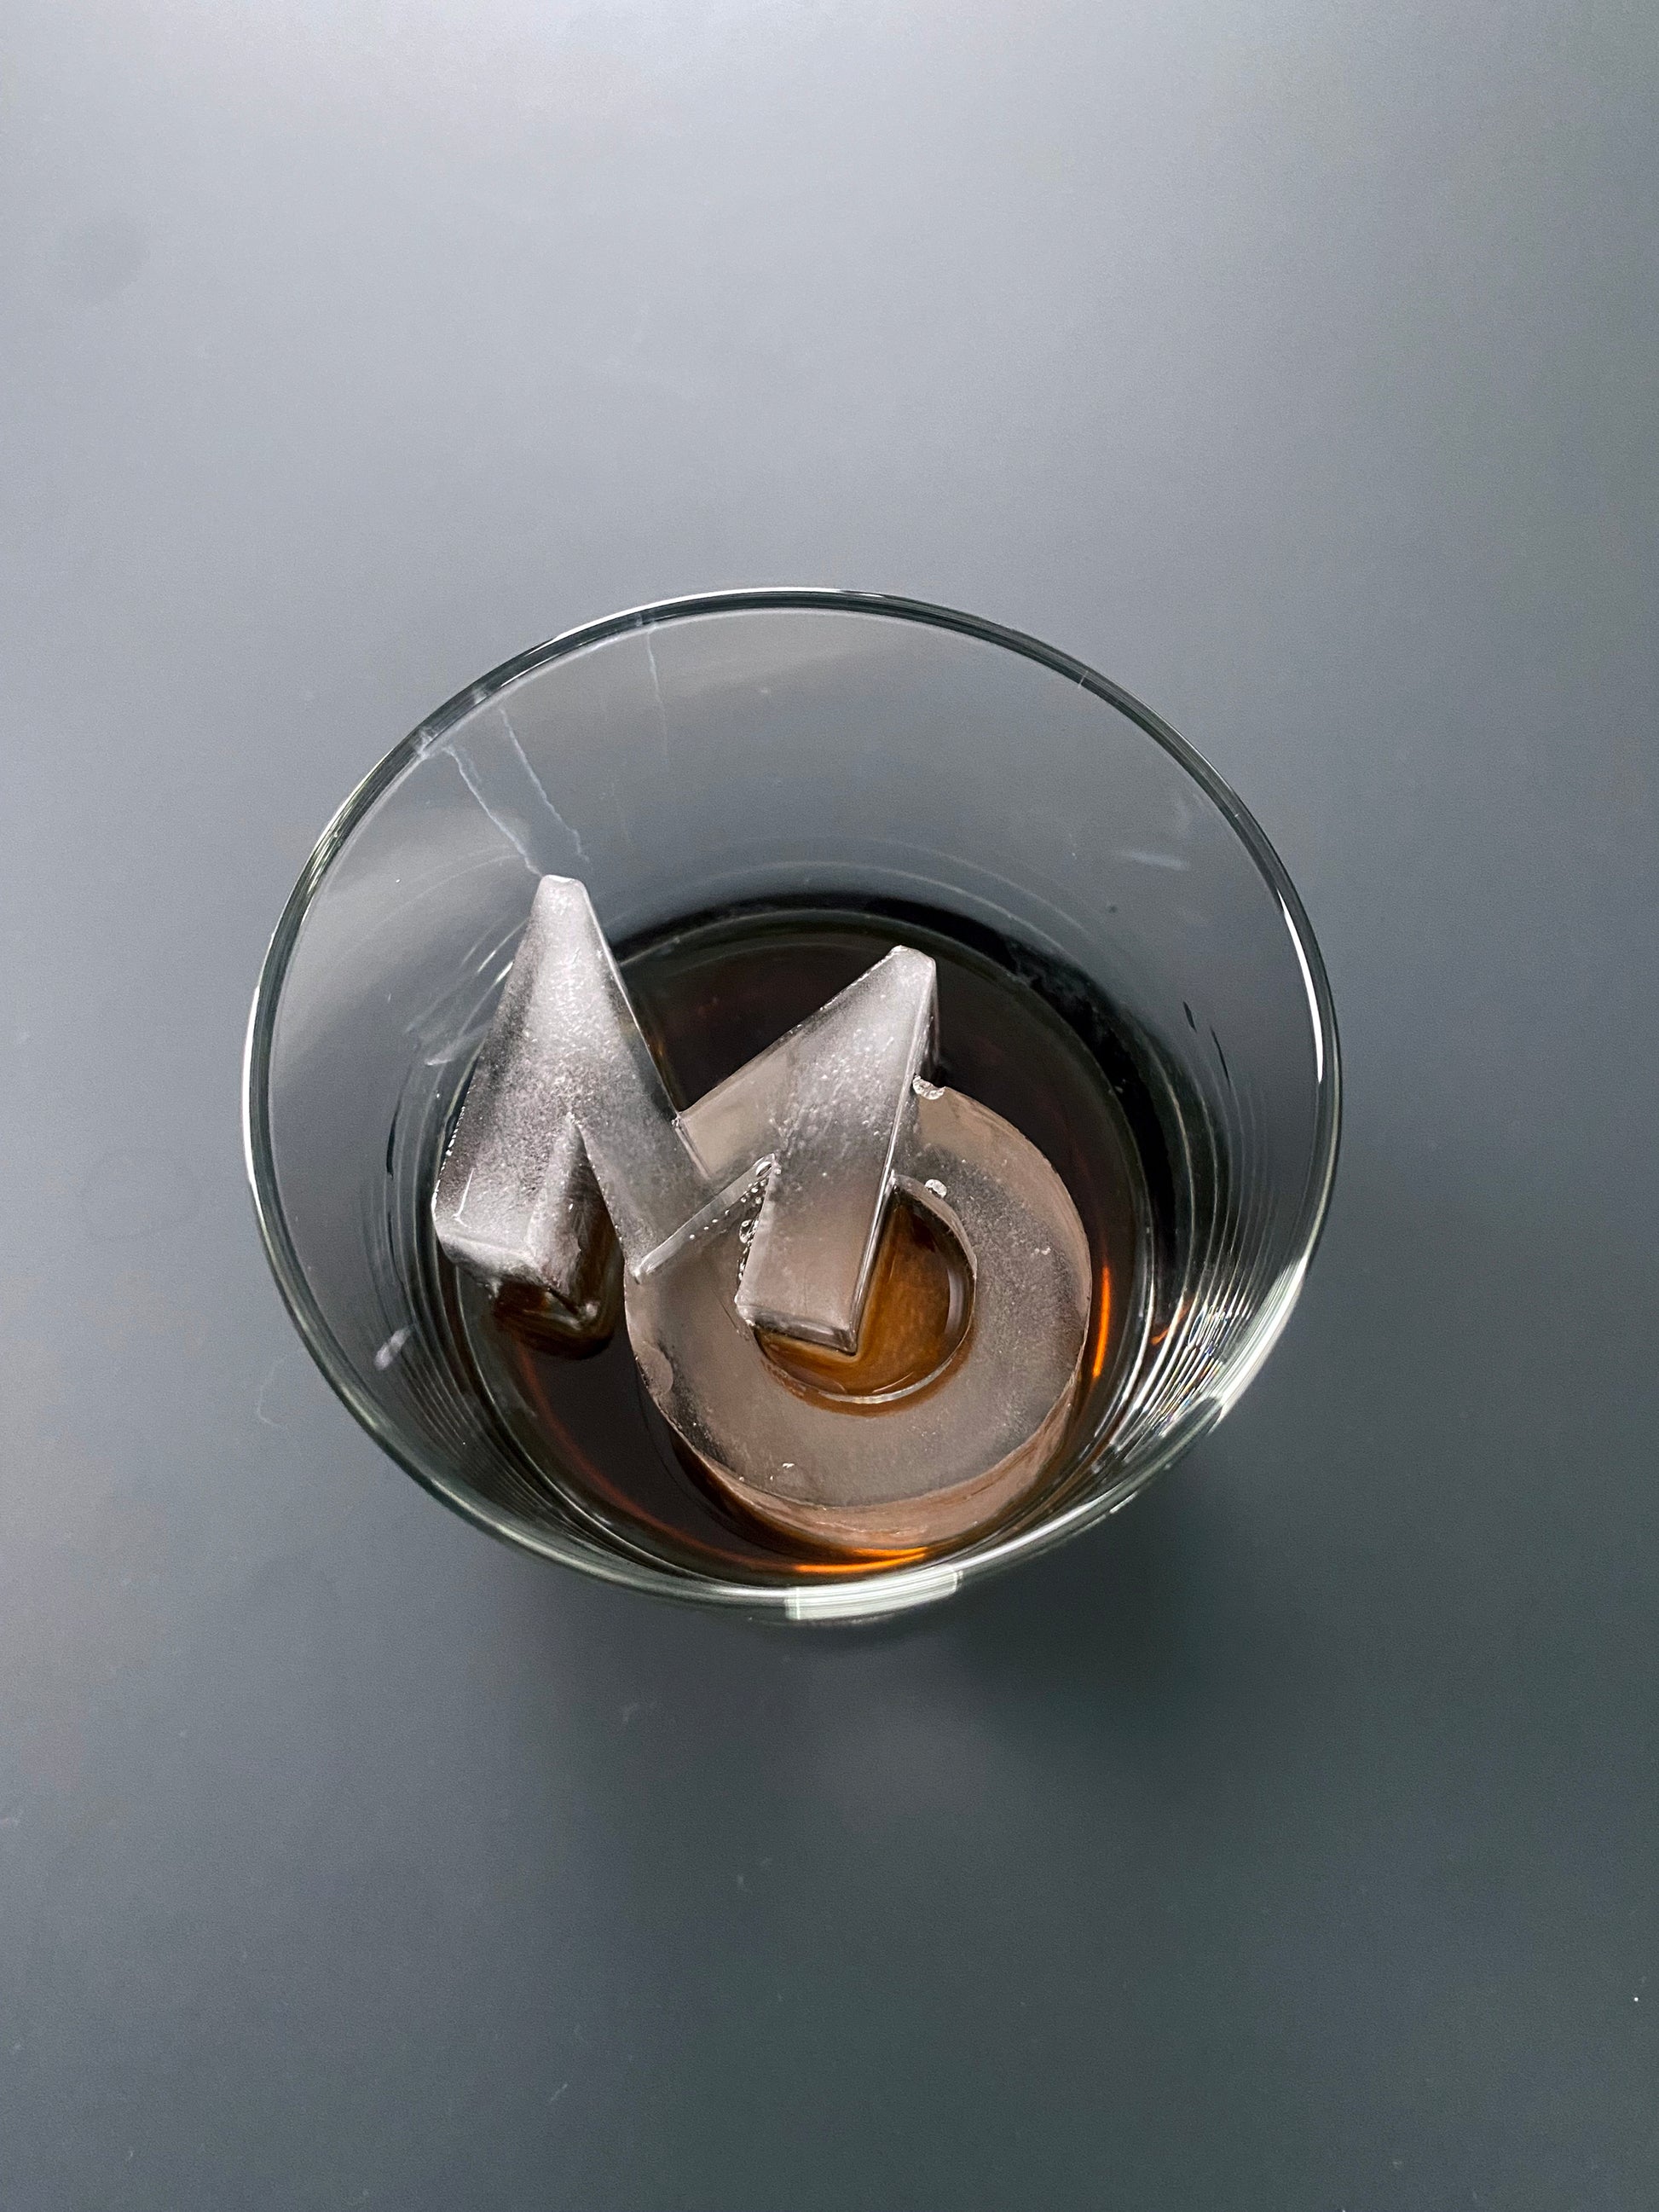  Custom Ice Cube Mold Tray Monogram for Whiskey and